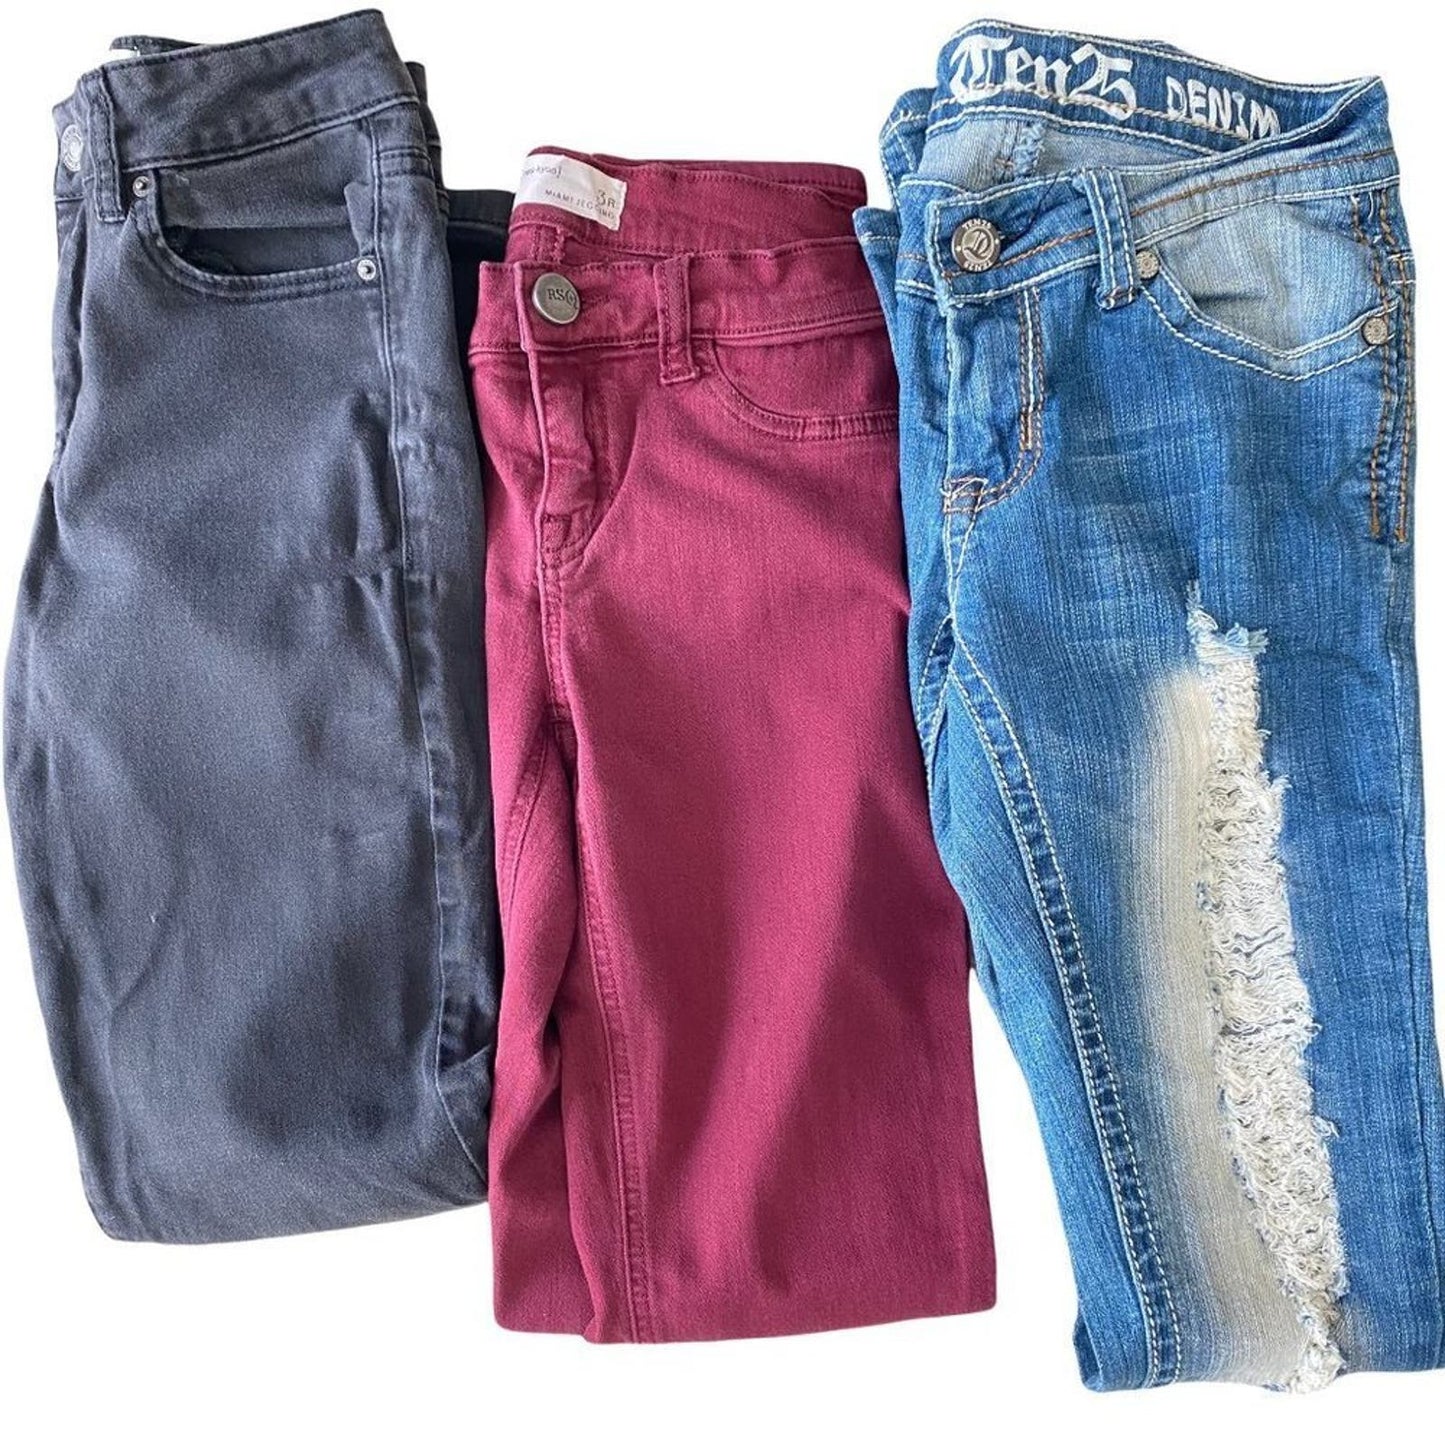 Garage/Res Kyoo/ ten25 sz 1 & 3 Junior jean lot bundle pants jeans